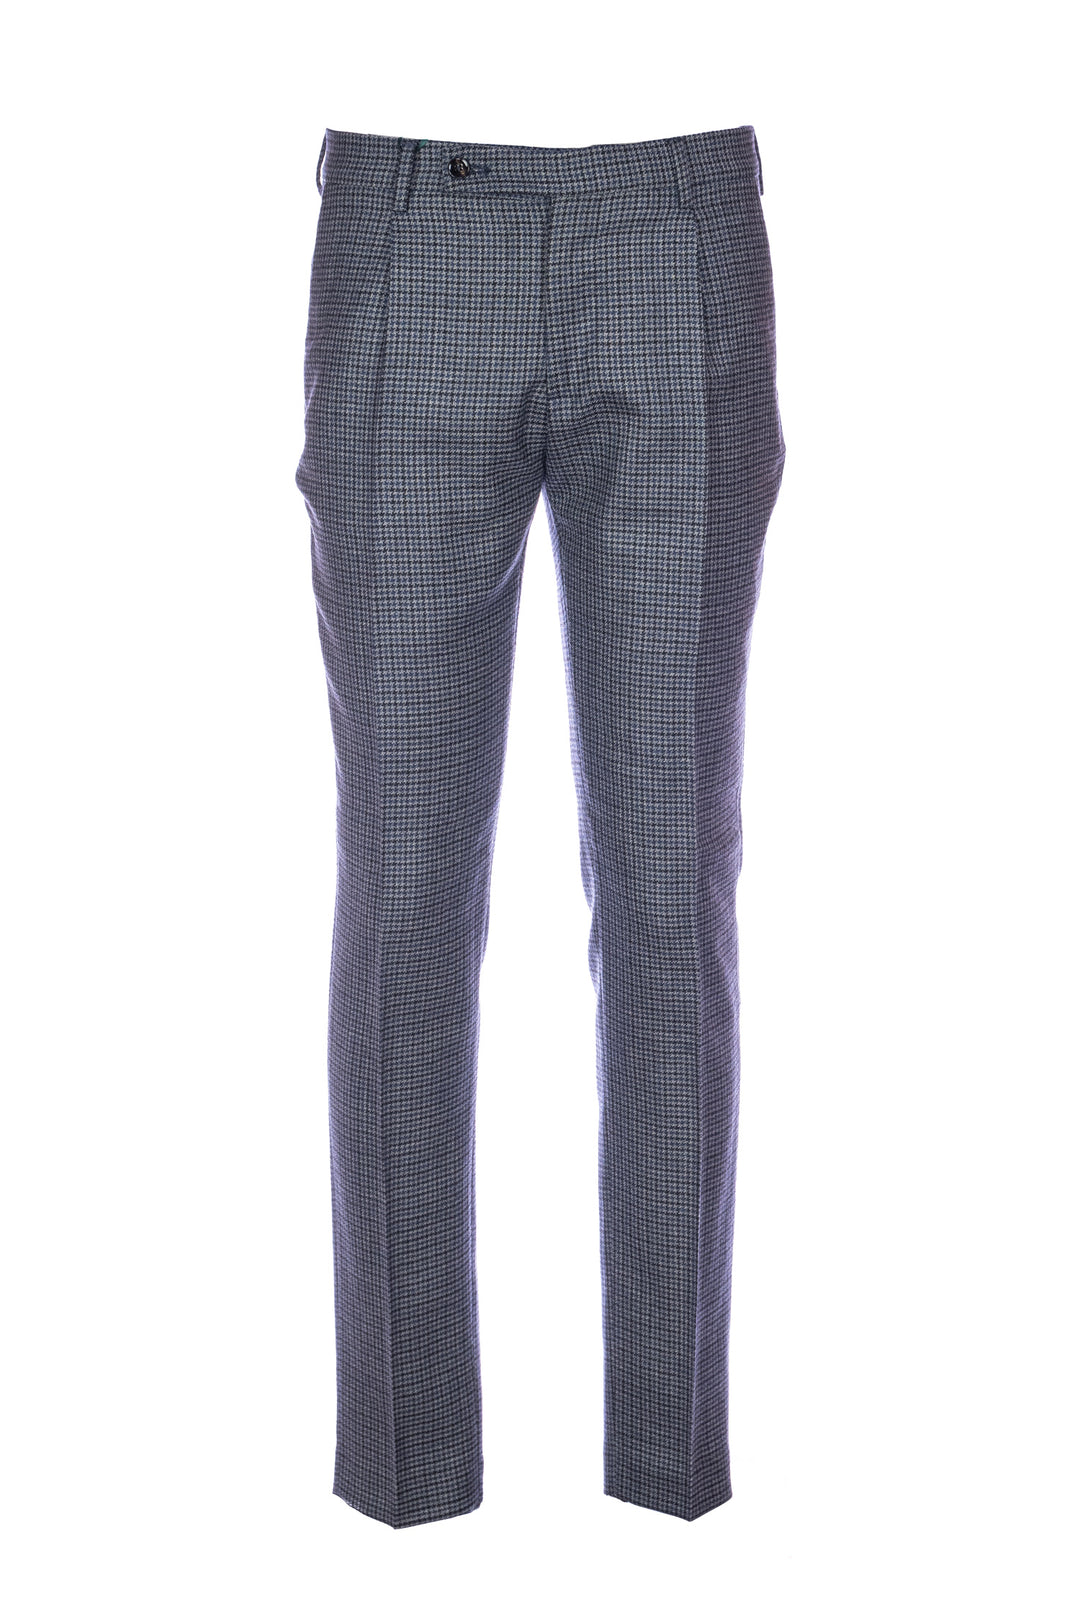 BERWICH Pantalone pied de poule grigio in lana vergine stretch con una pince - Mancinelli 1954